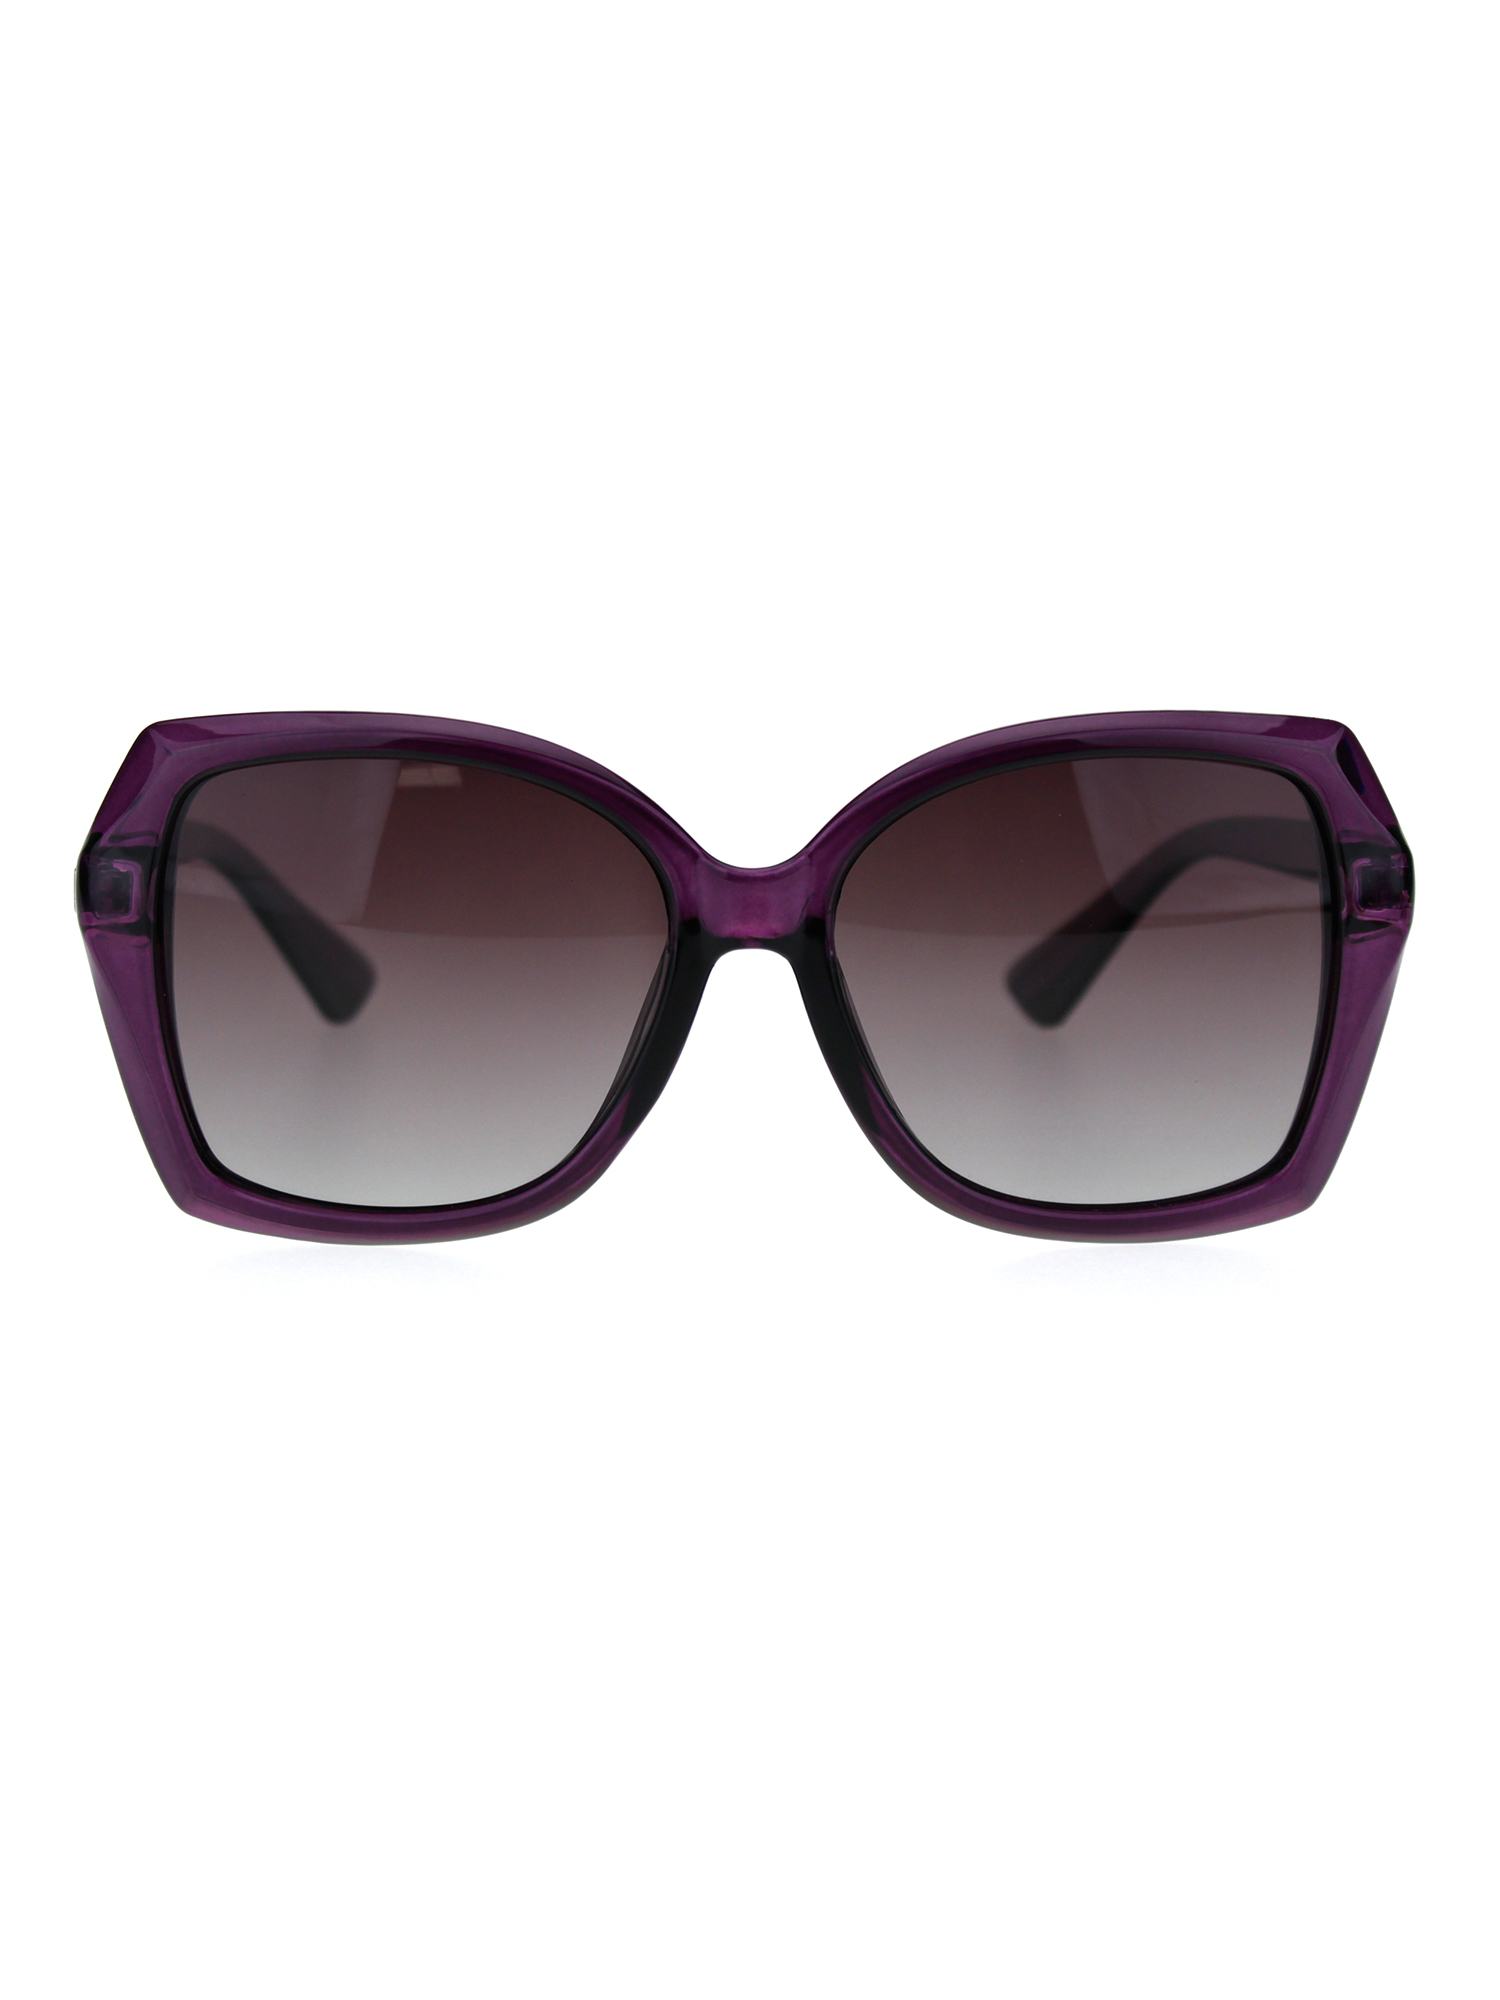 Womens CR39 Polarized Square Plastic Butterfly Designer Fashion Sunglasses All Purple - image 2 of 4